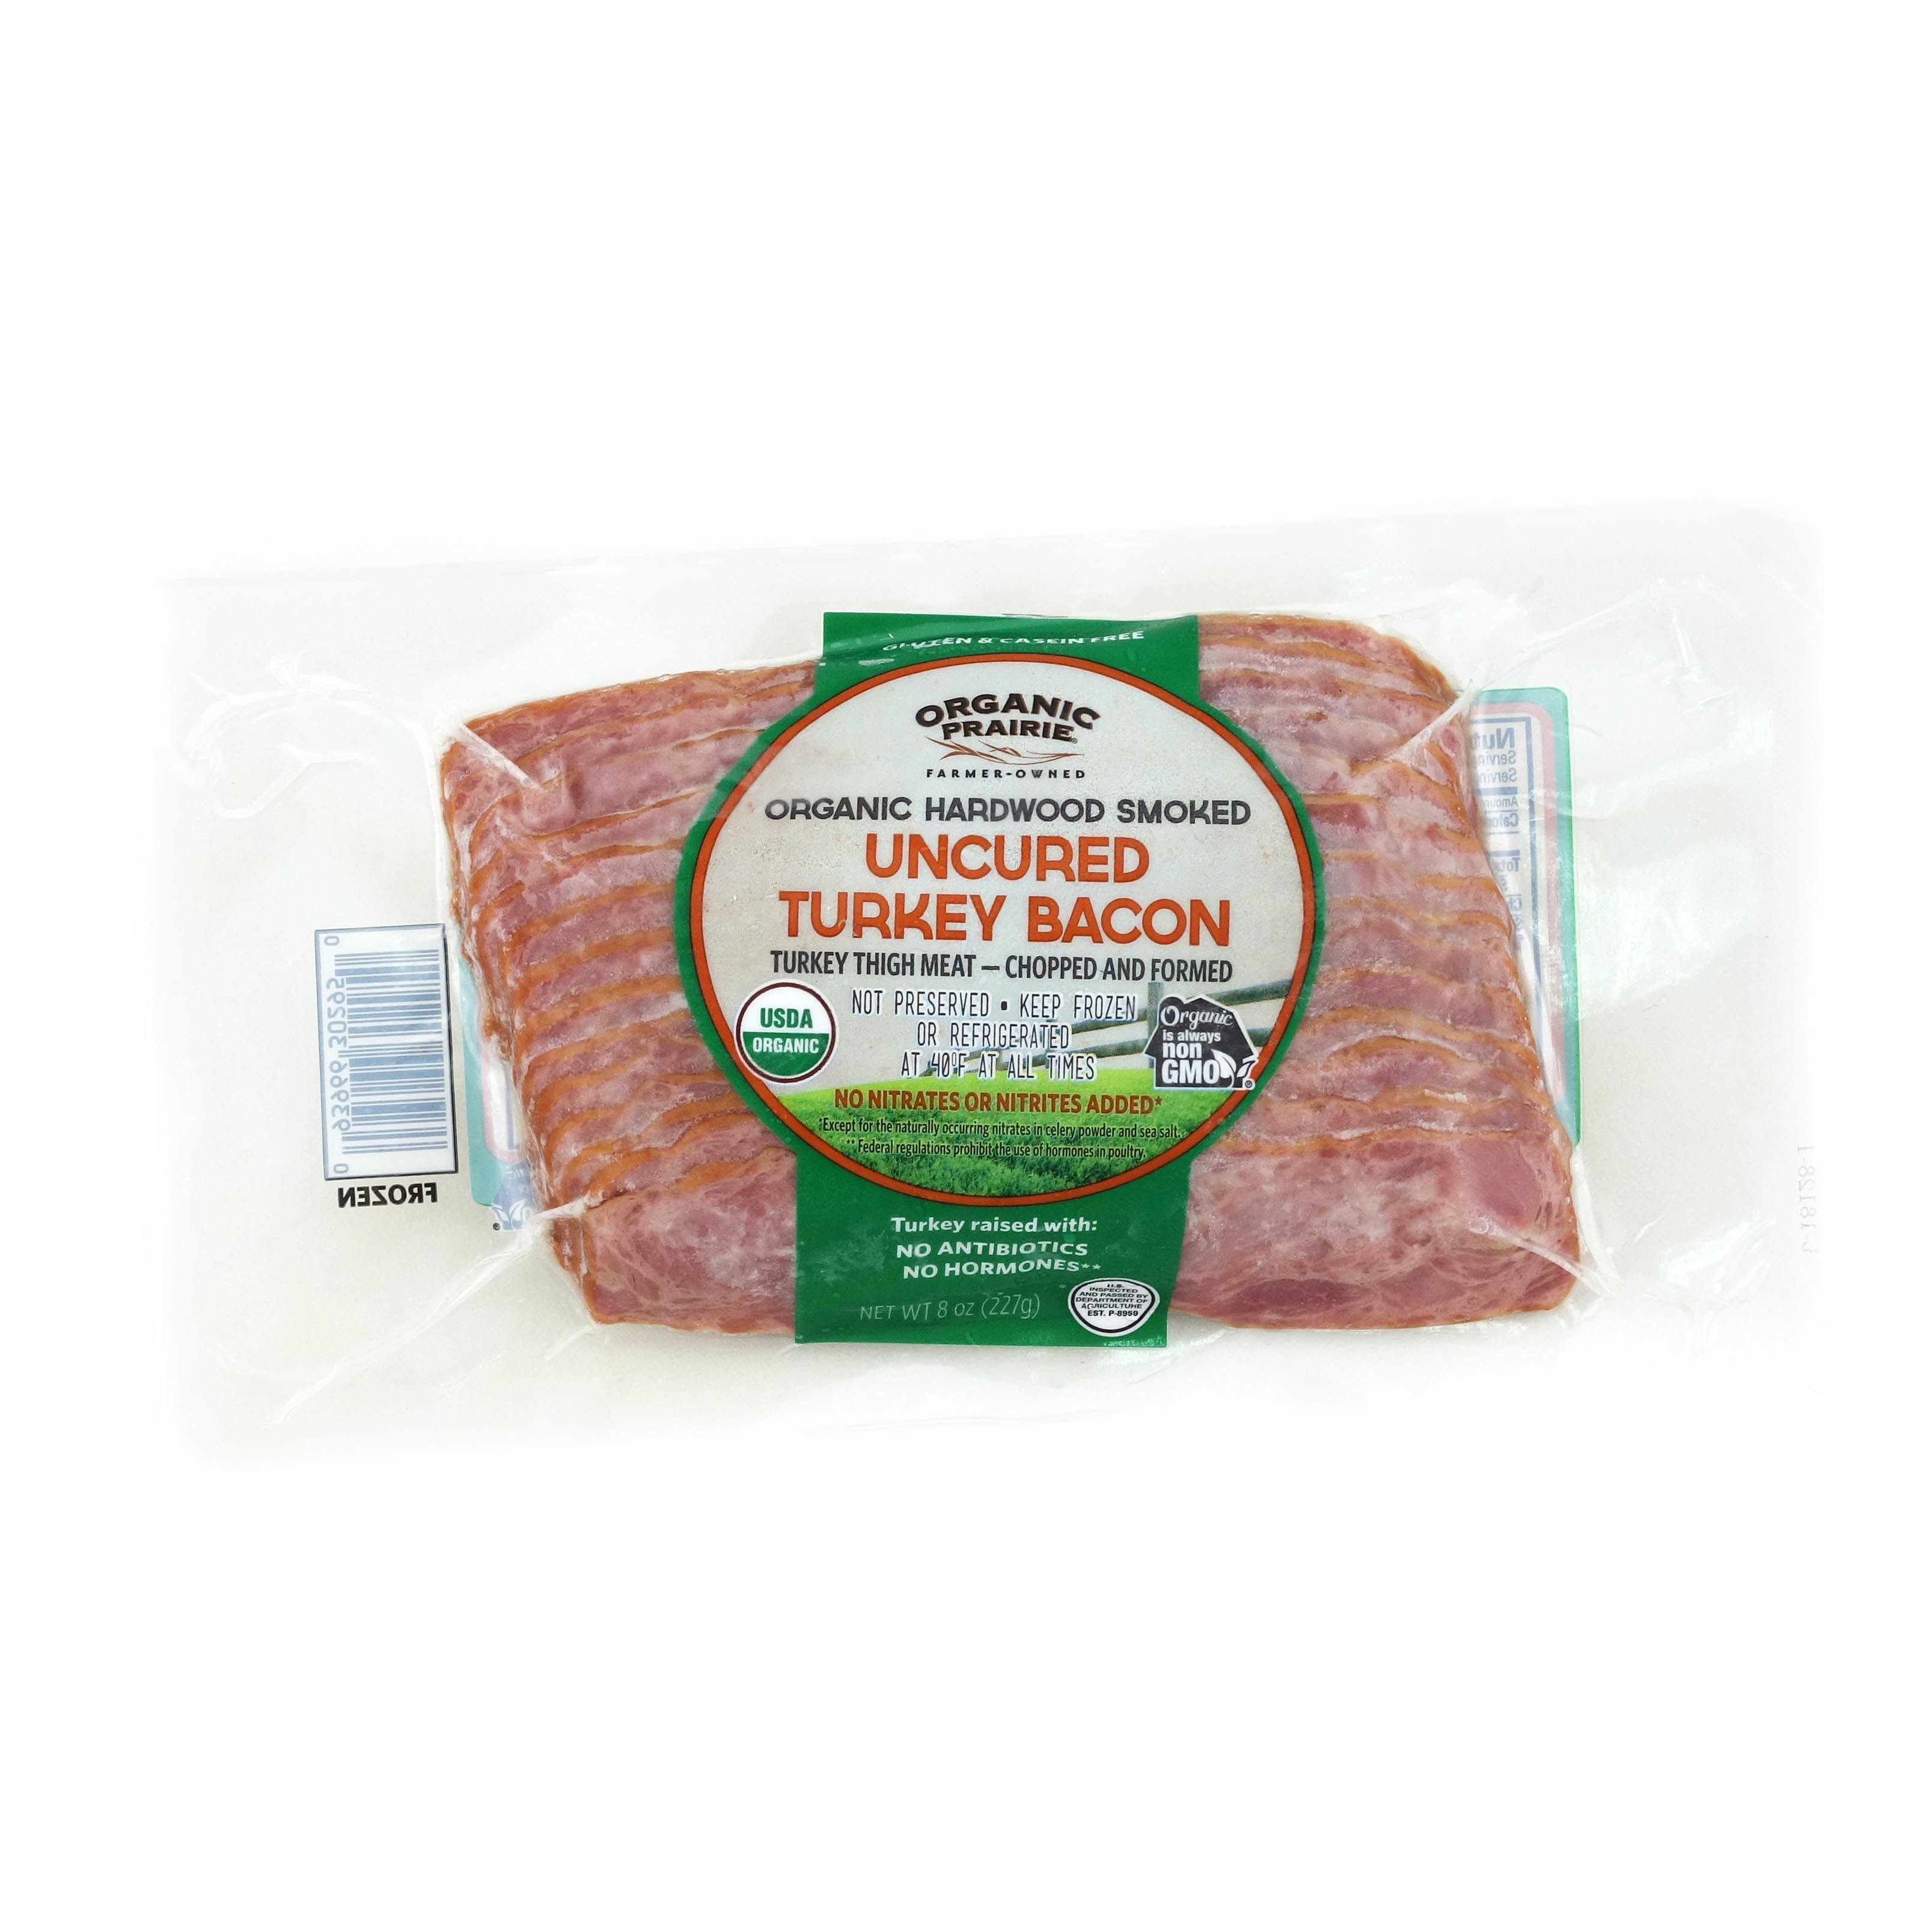 Frozen US Organic Prairie Smoked Turkey Bacon 227g*